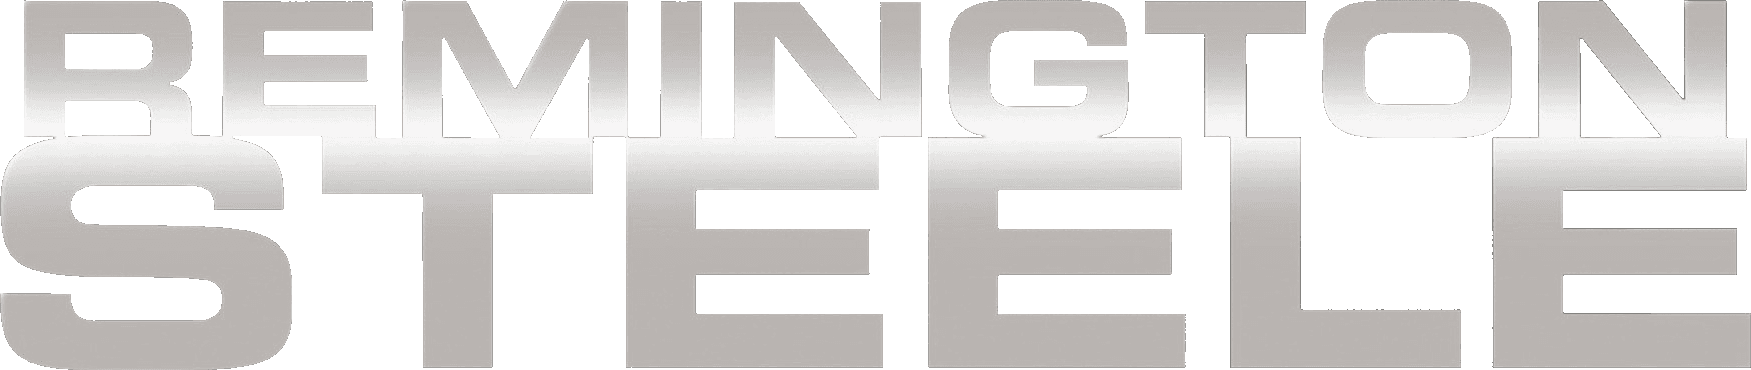 Remington Steele logo